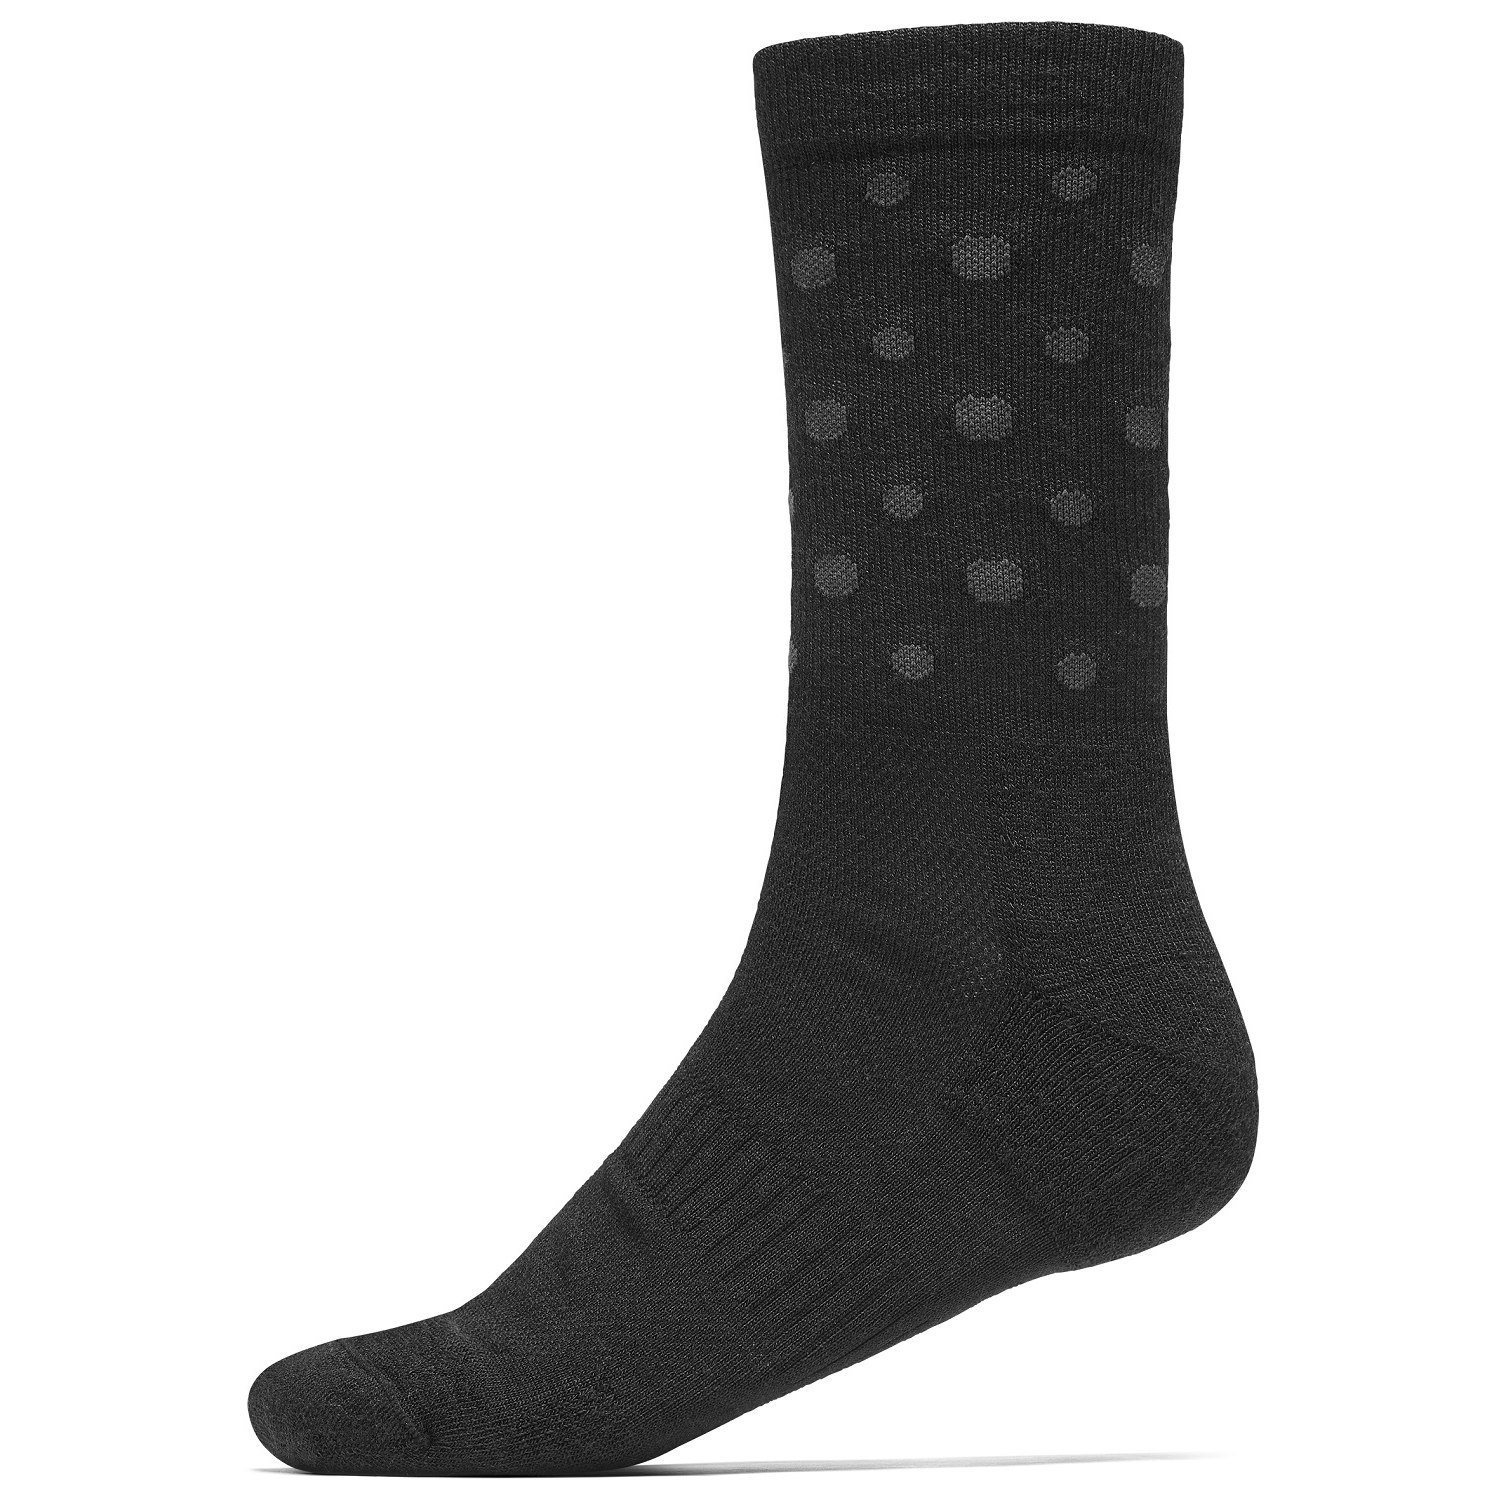 Image of Icebug Active Merino Socks - spots black/grey